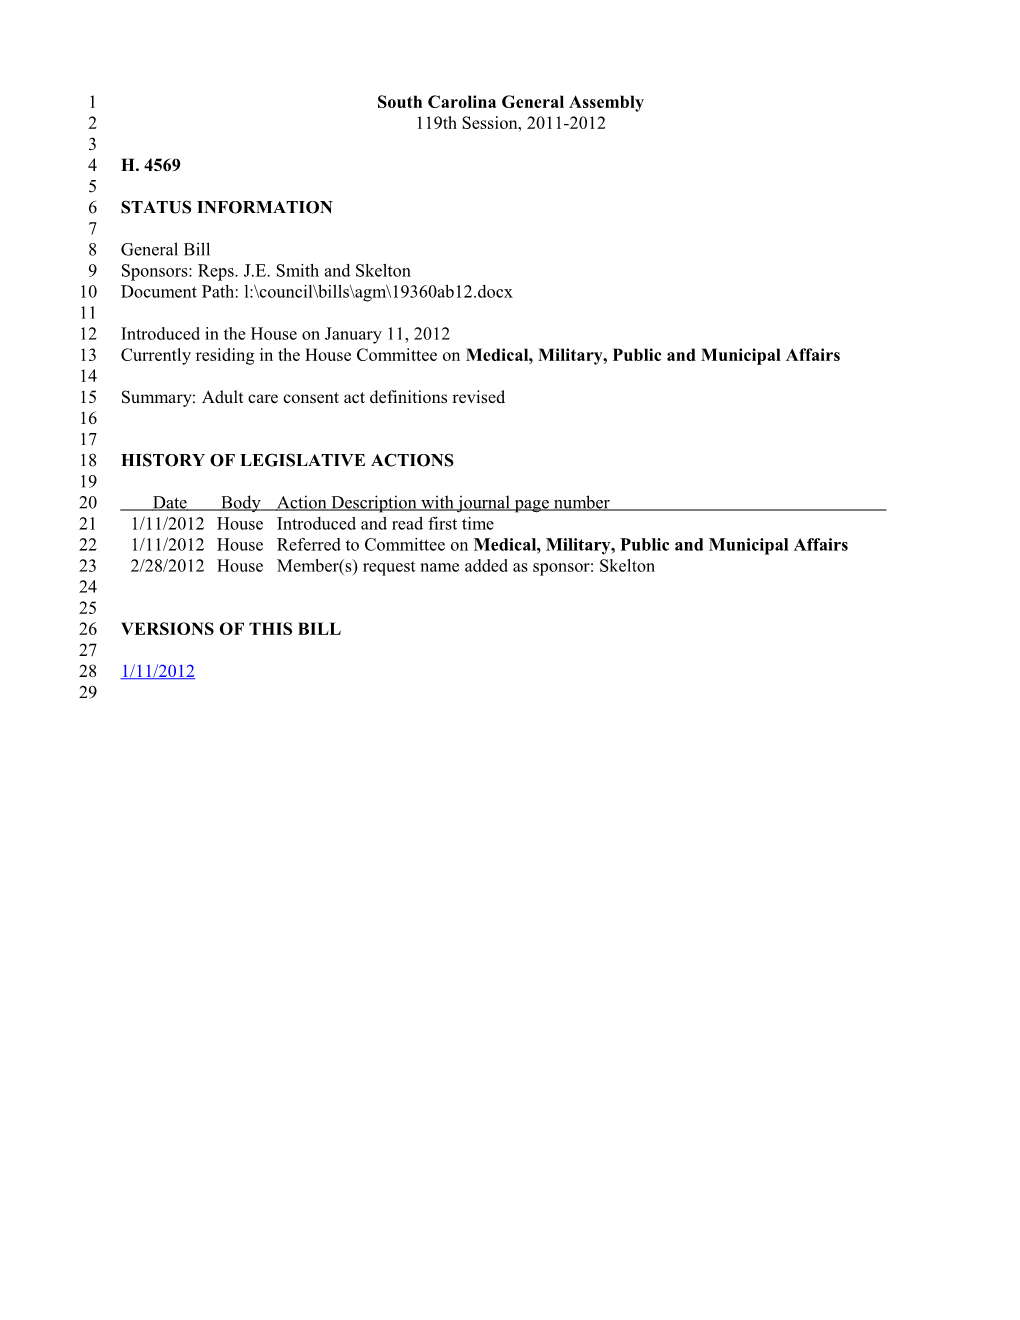 2011-2012 Bill 4569: Adult Care Consent Act Definitions Revised - South Carolina Legislature